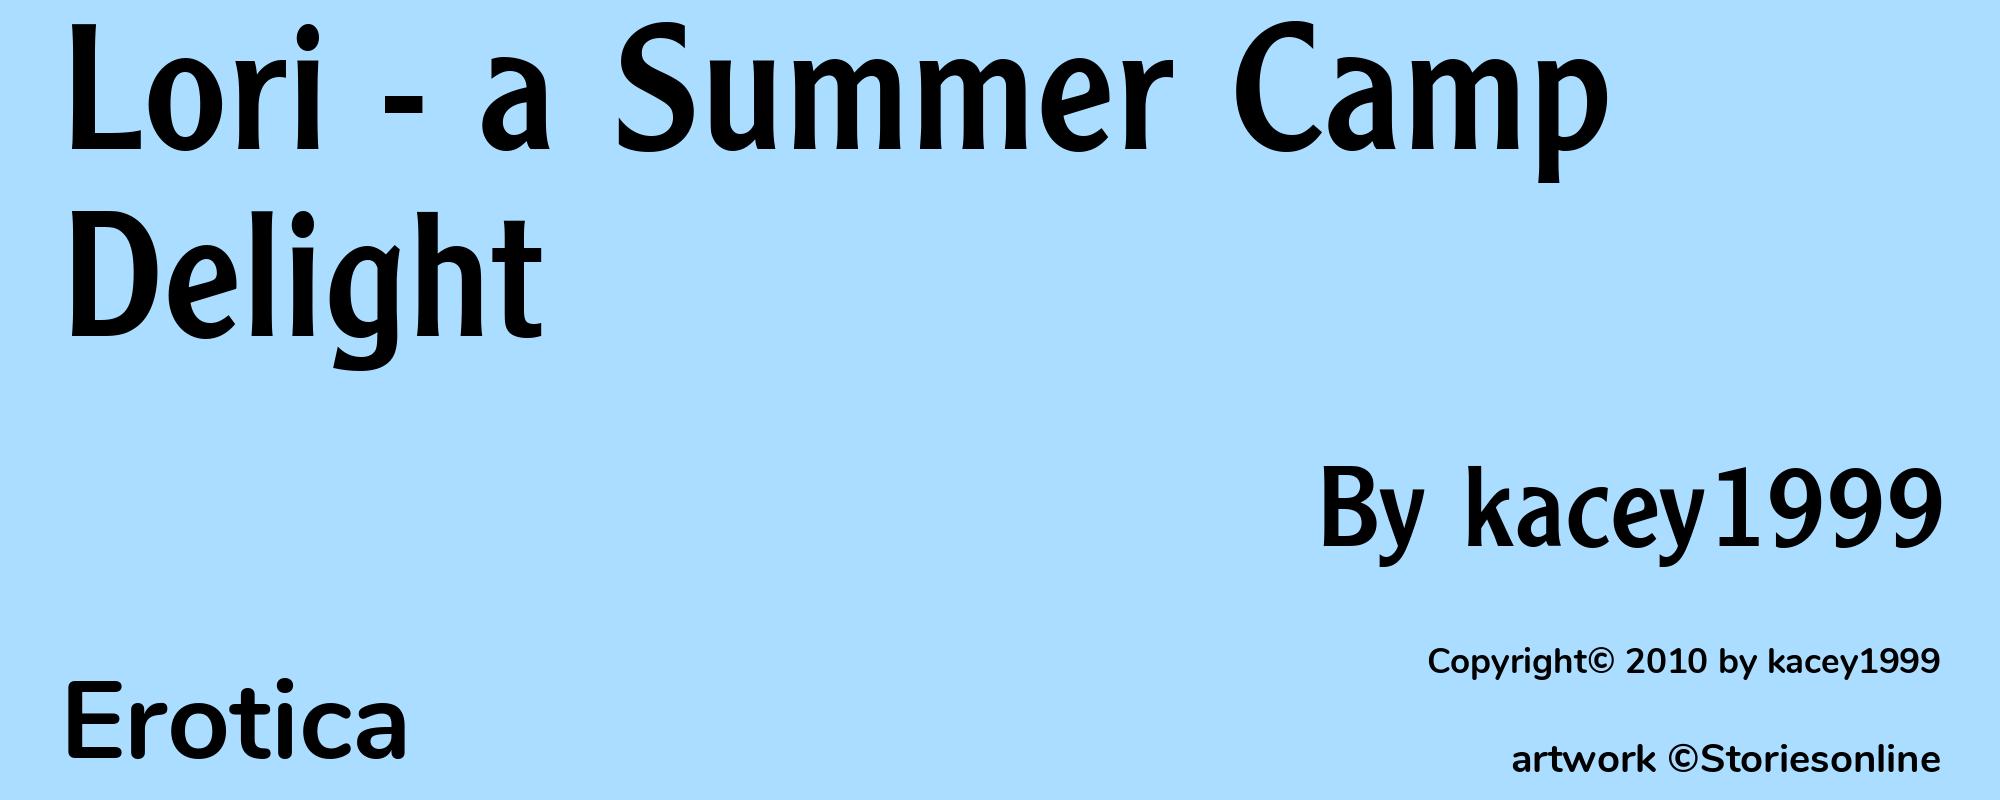 Lori - a Summer Camp Delight - Cover